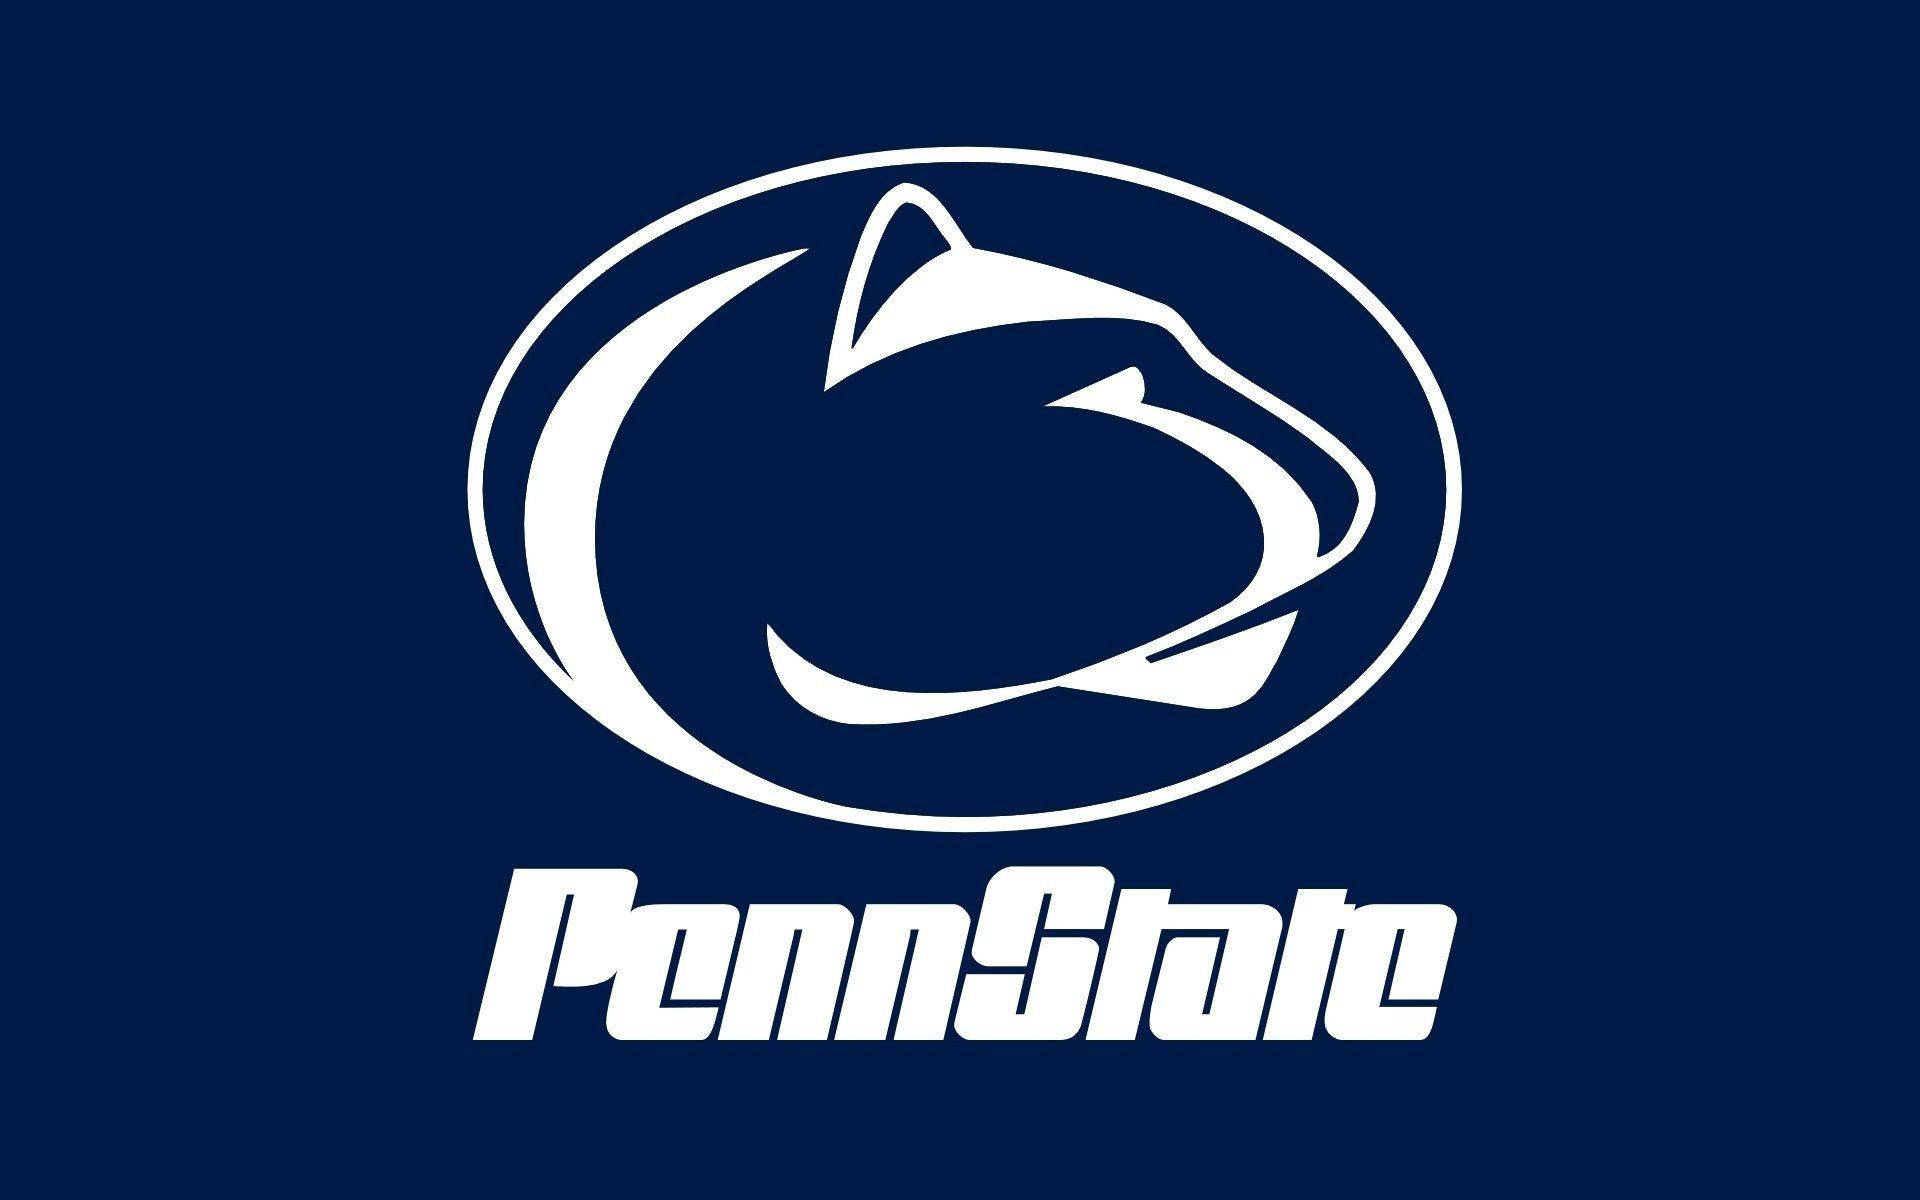 Logode La Universidad Estatal De Pennsylvania, Pennstate. Fondo de pantalla